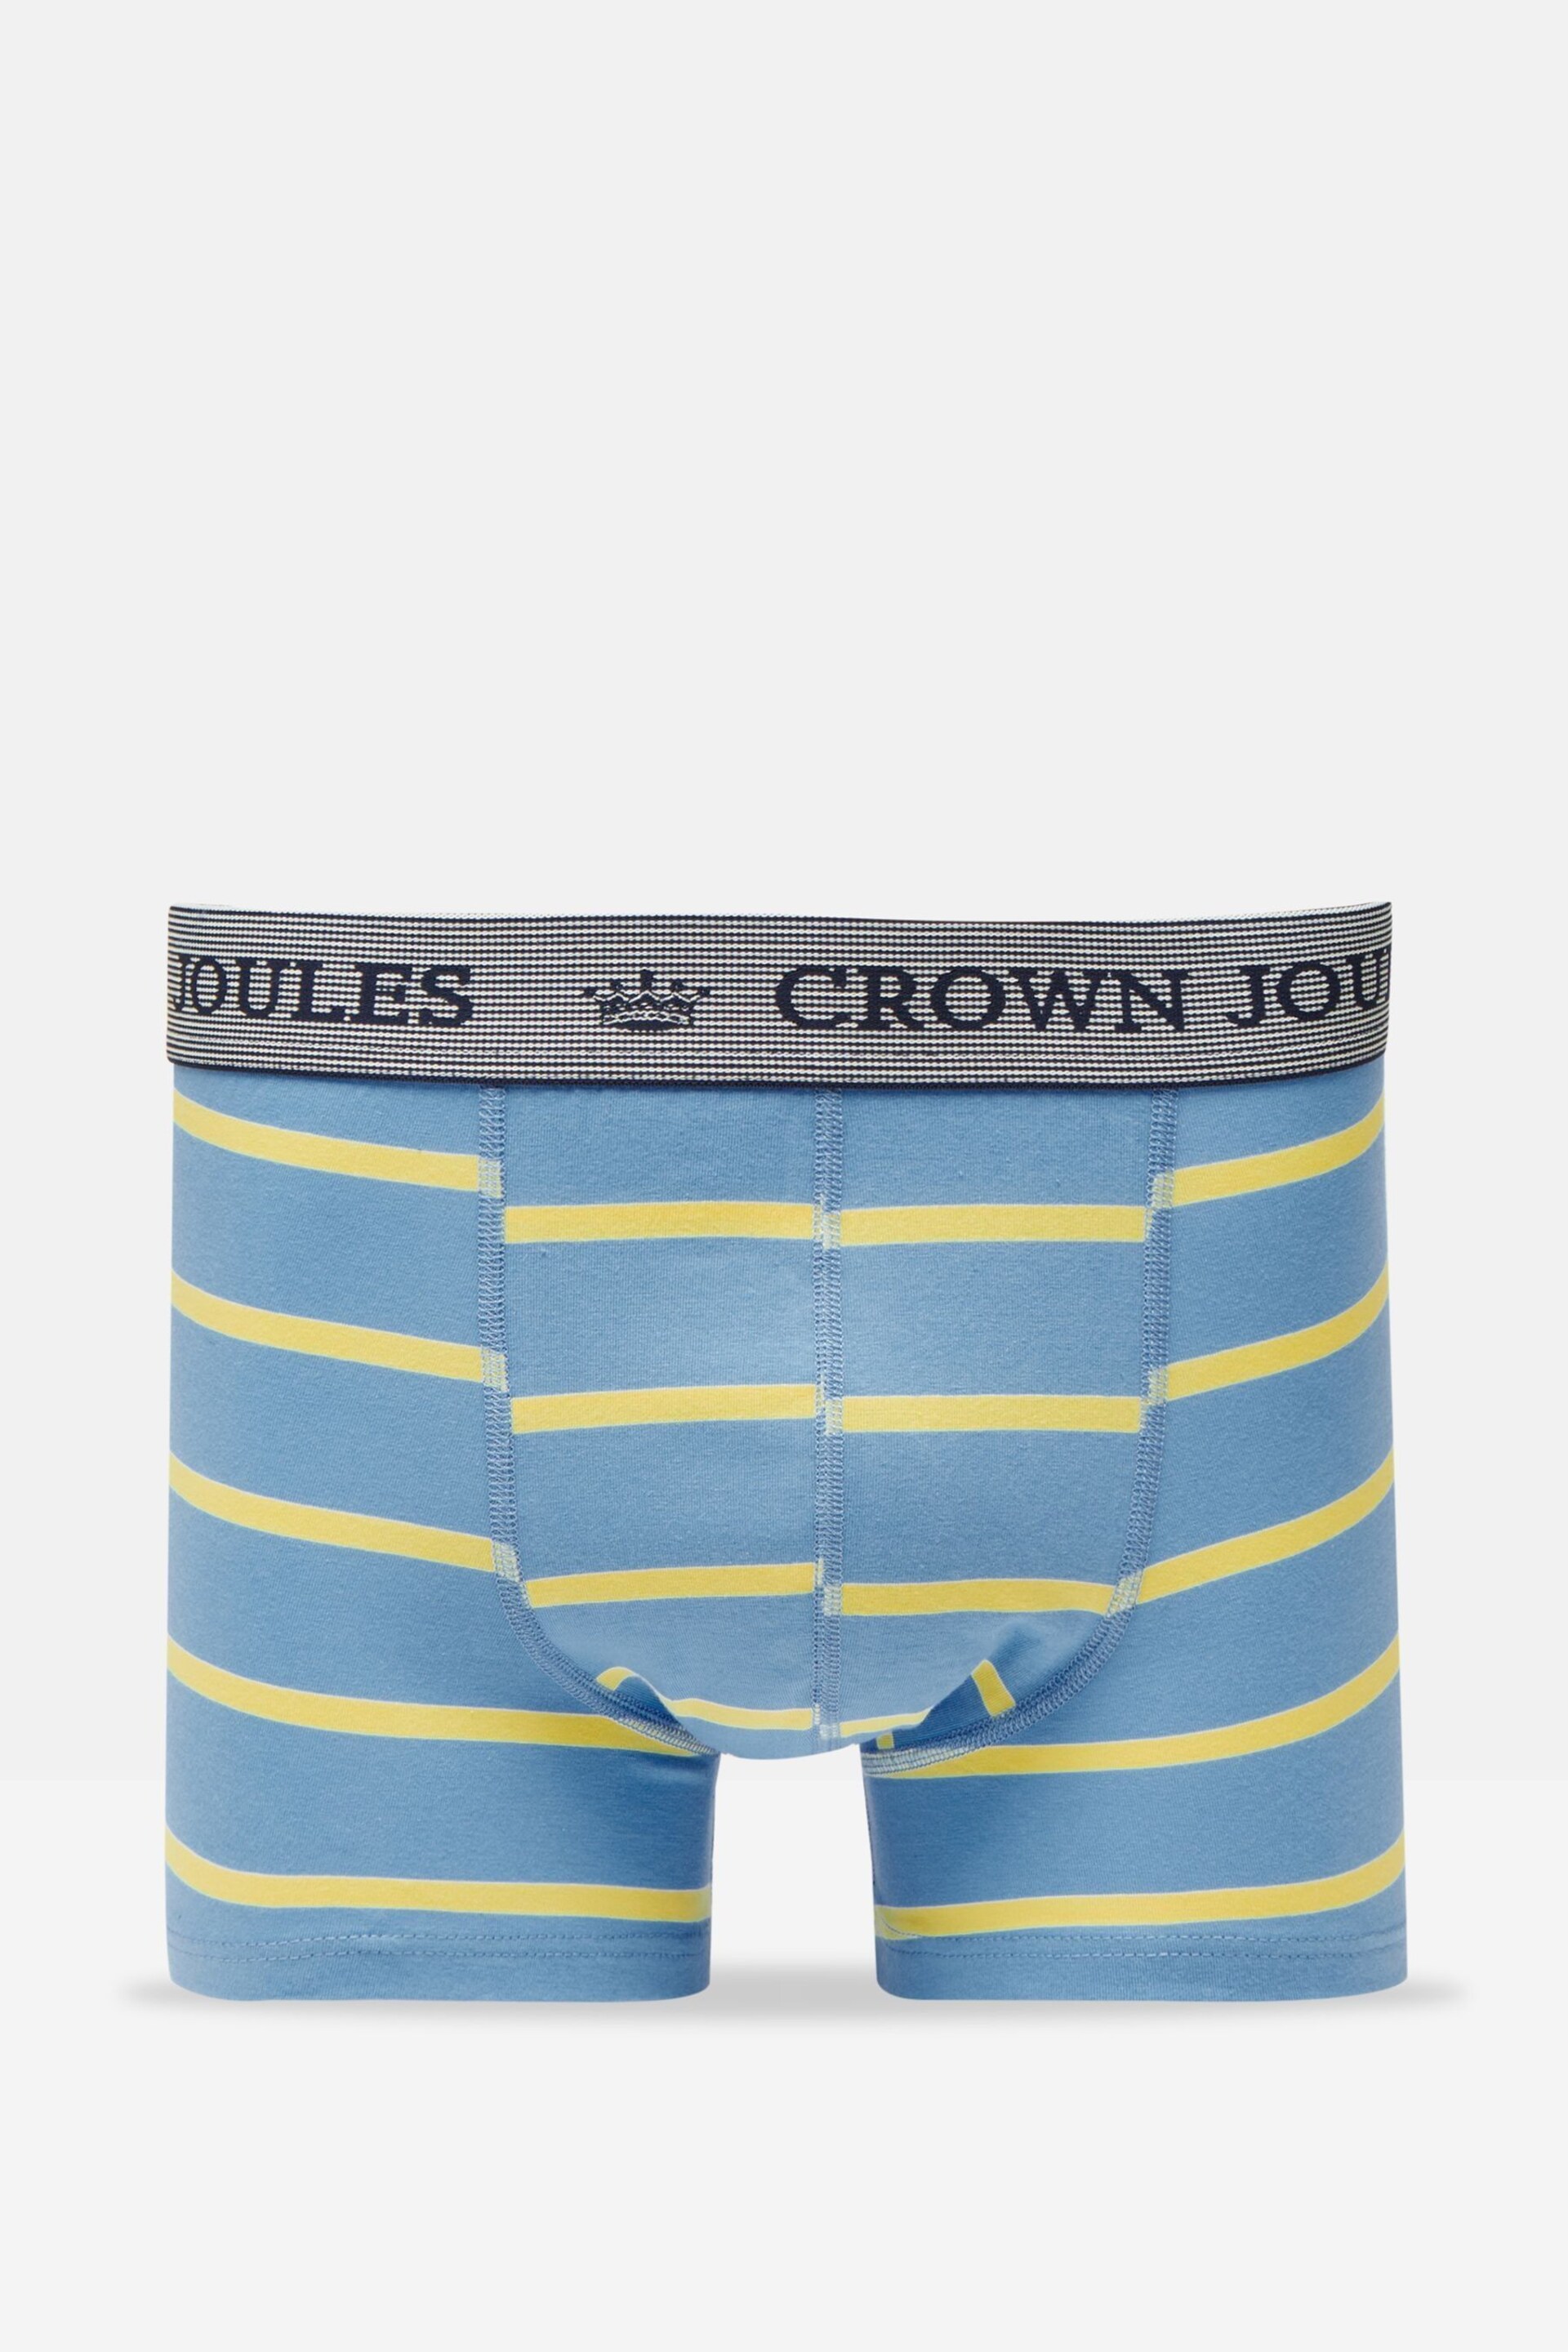 Joules Crown Blue Sail Cotton Boxer Briefs 2 Pack - Image 3 of 4